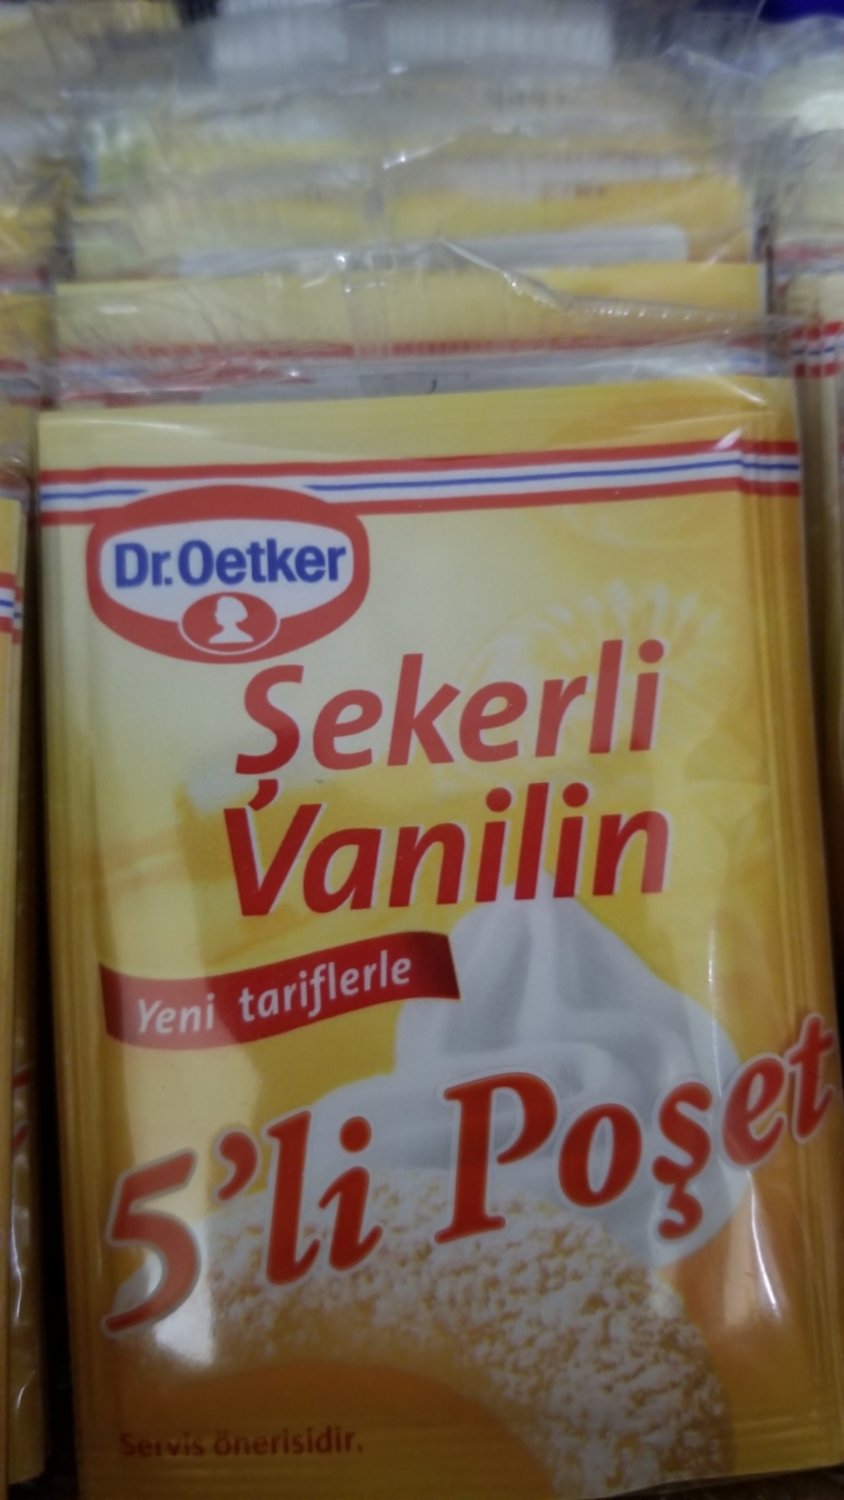 DR. OETKER Sekerli Vanilin Sugar Vanilla Powder 15pcs